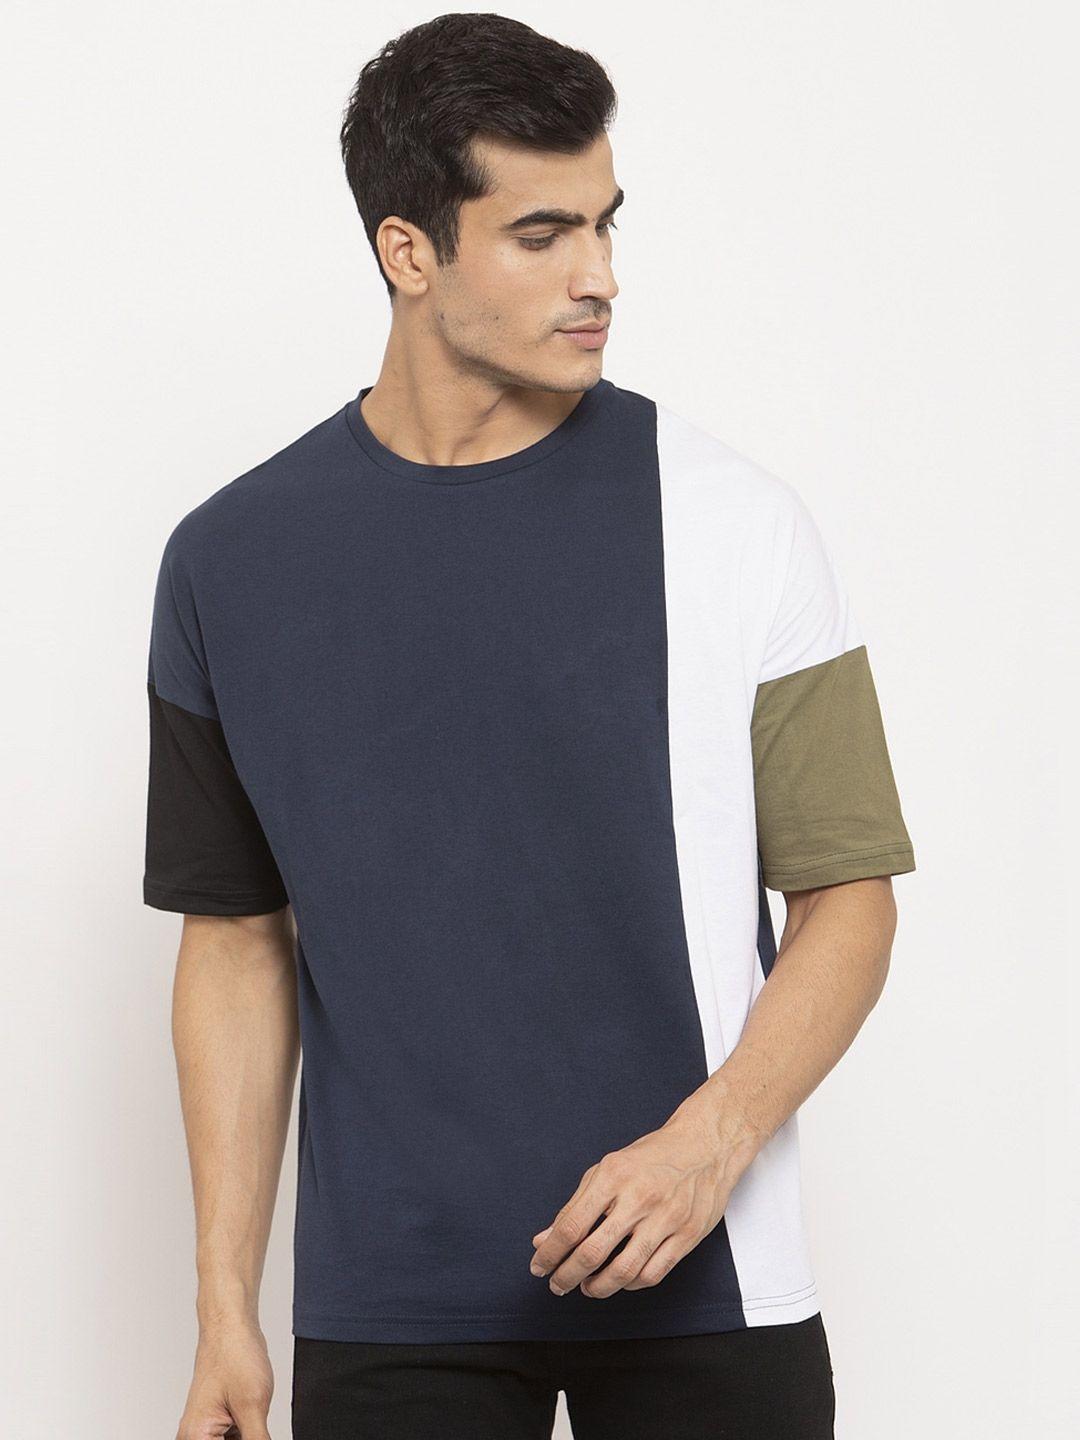 door74 men blue & white colourblocked extended sleeves boxy cotton t-shirt